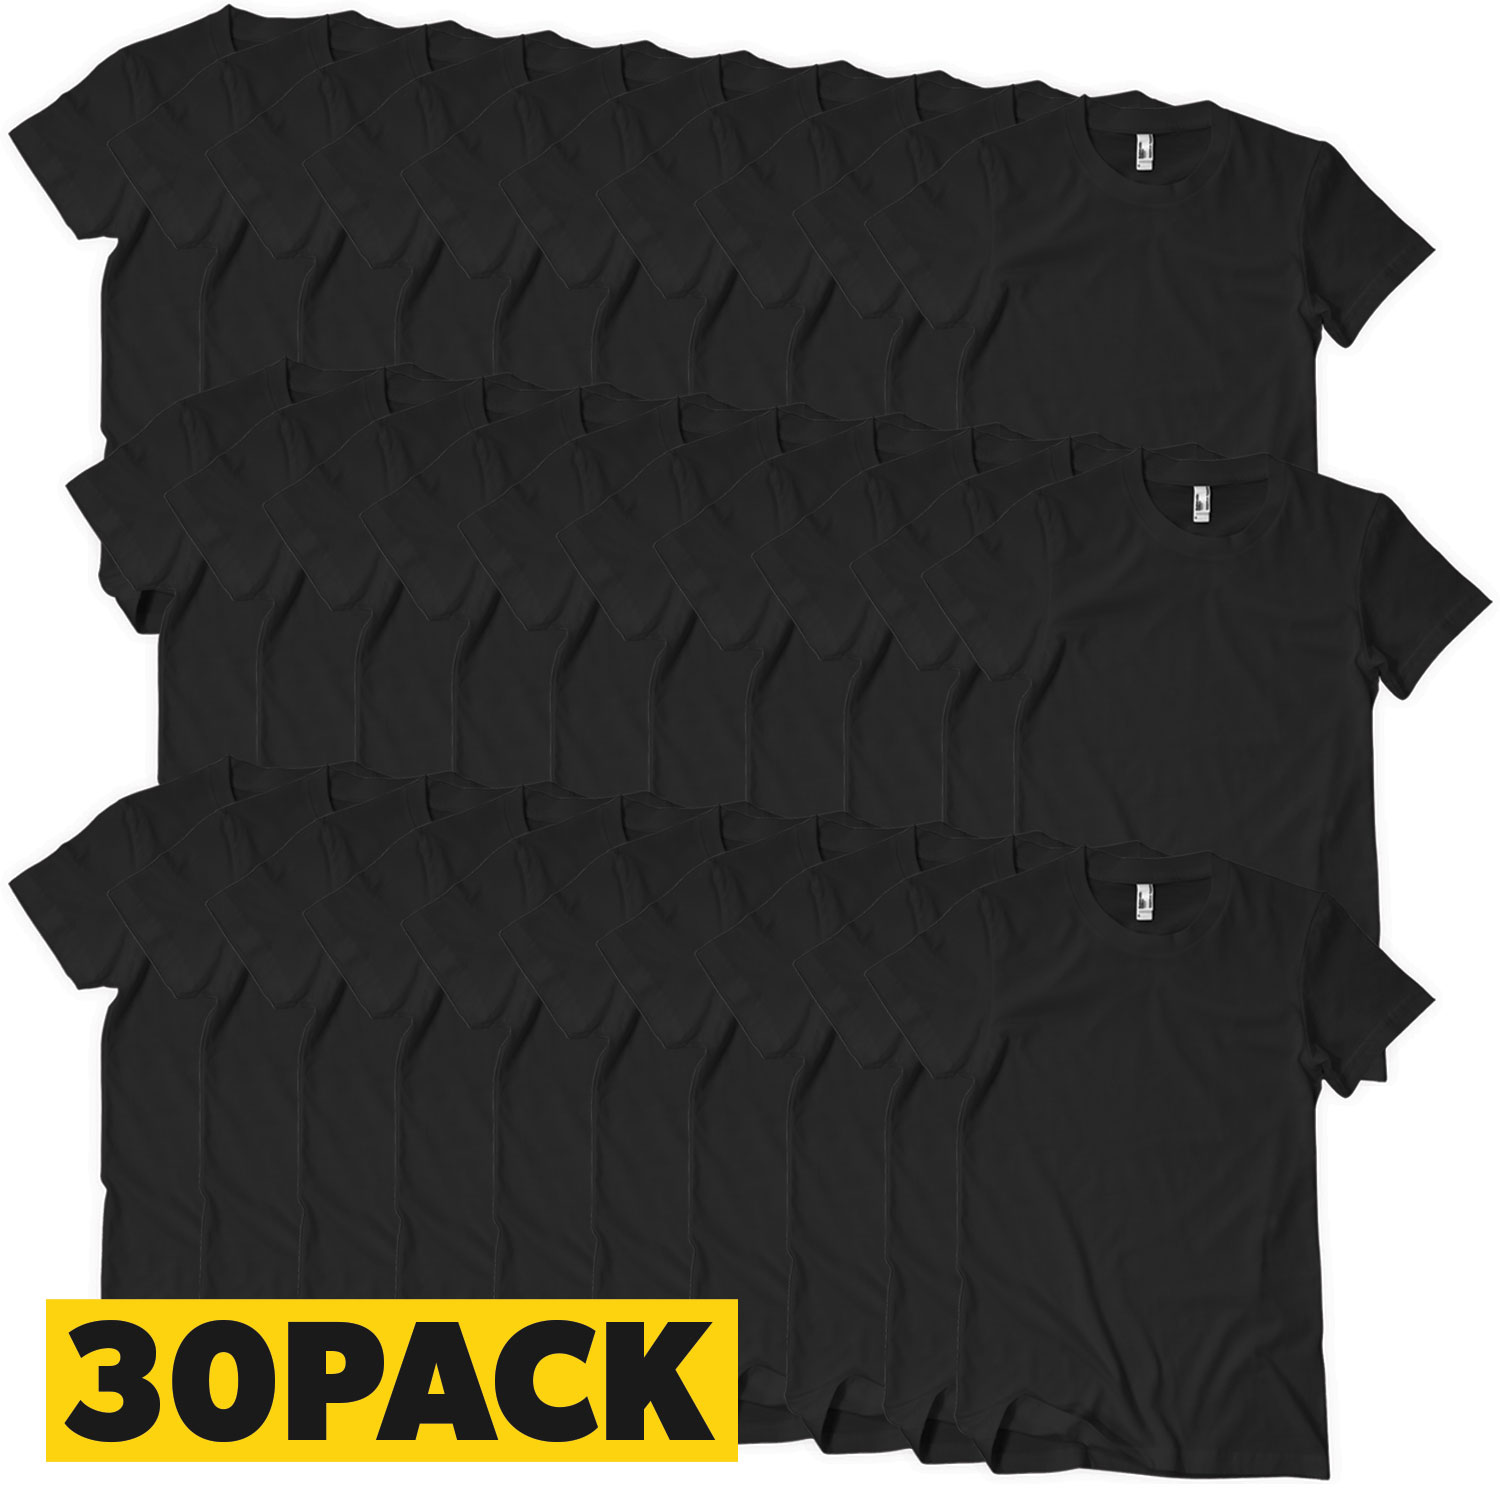 T-Shirts Megapack Svart - 30 pack